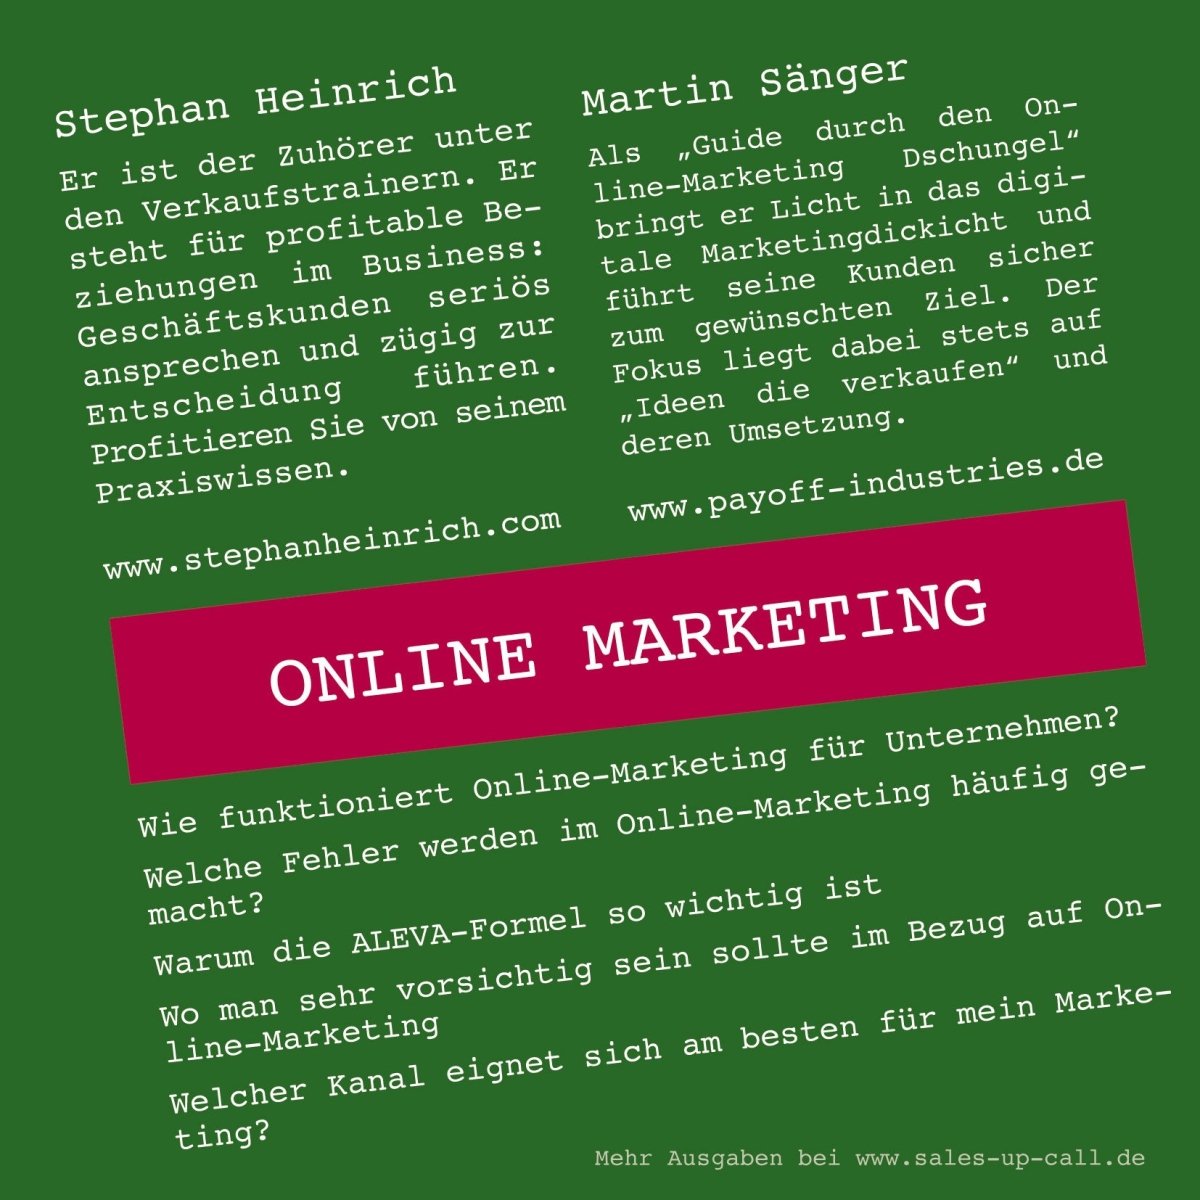 Online Marketing - Sales-up-Call - Stephan Heinrich